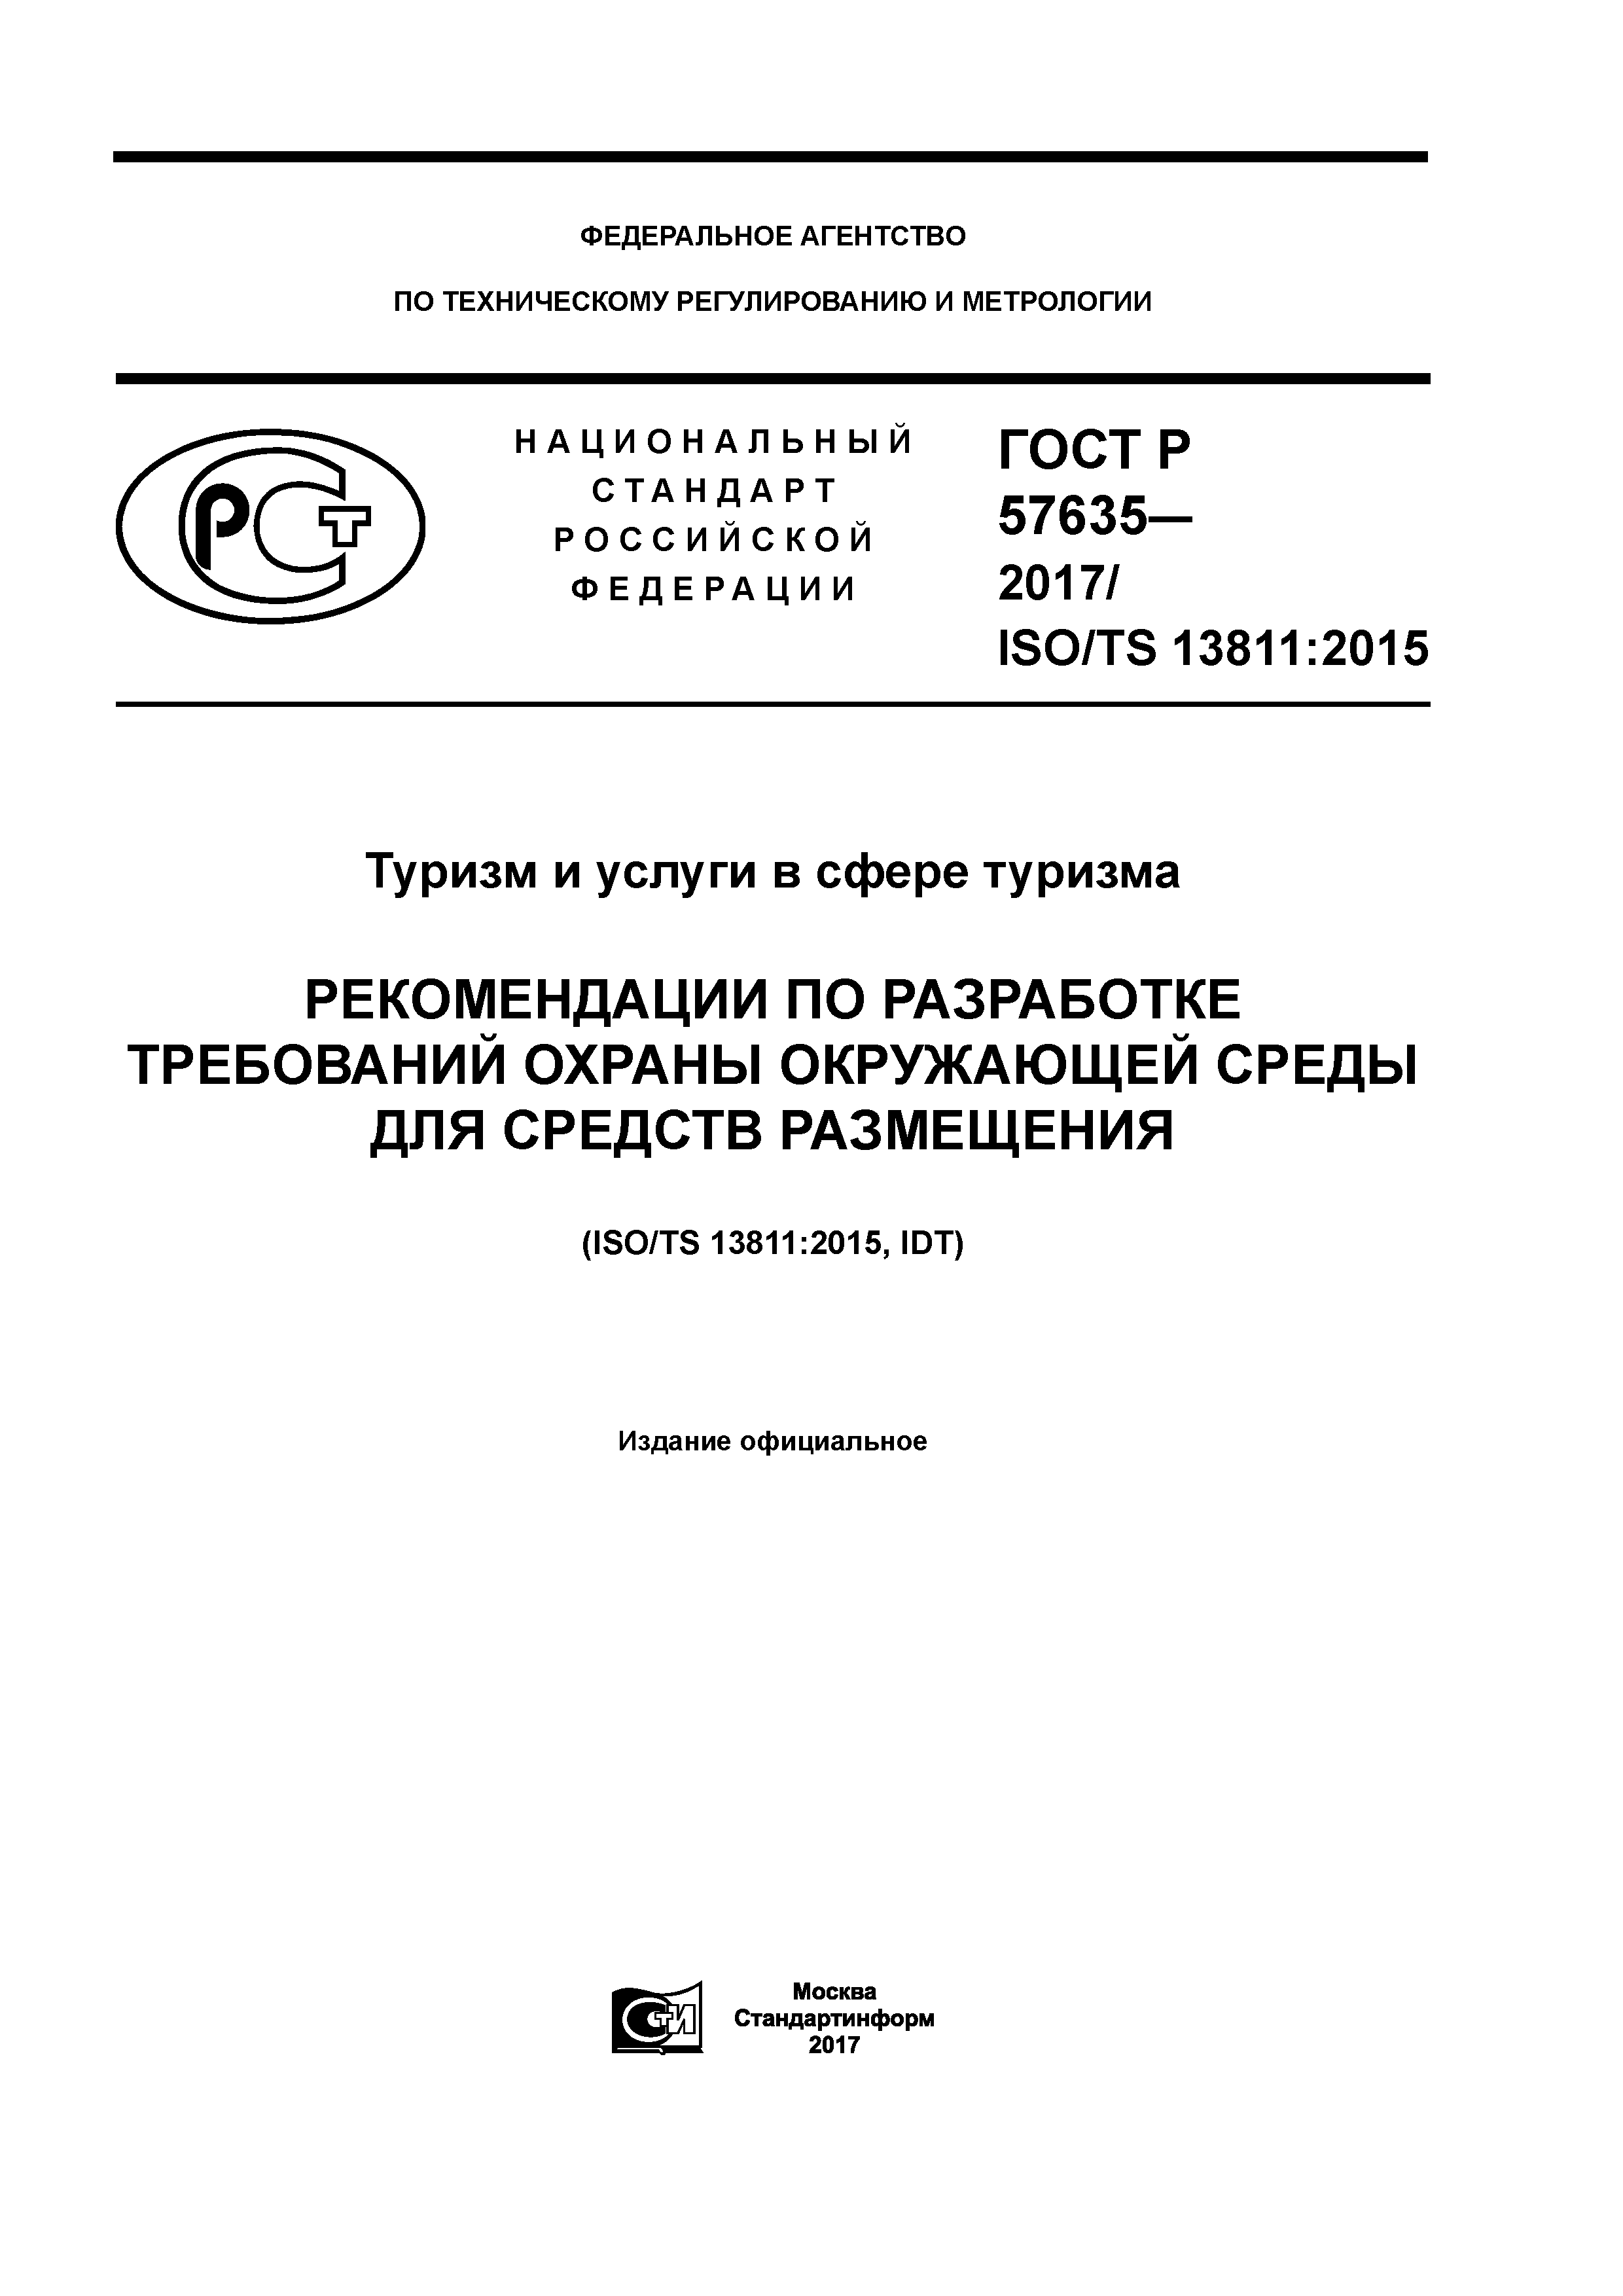 ГОСТ Р 57635-2017